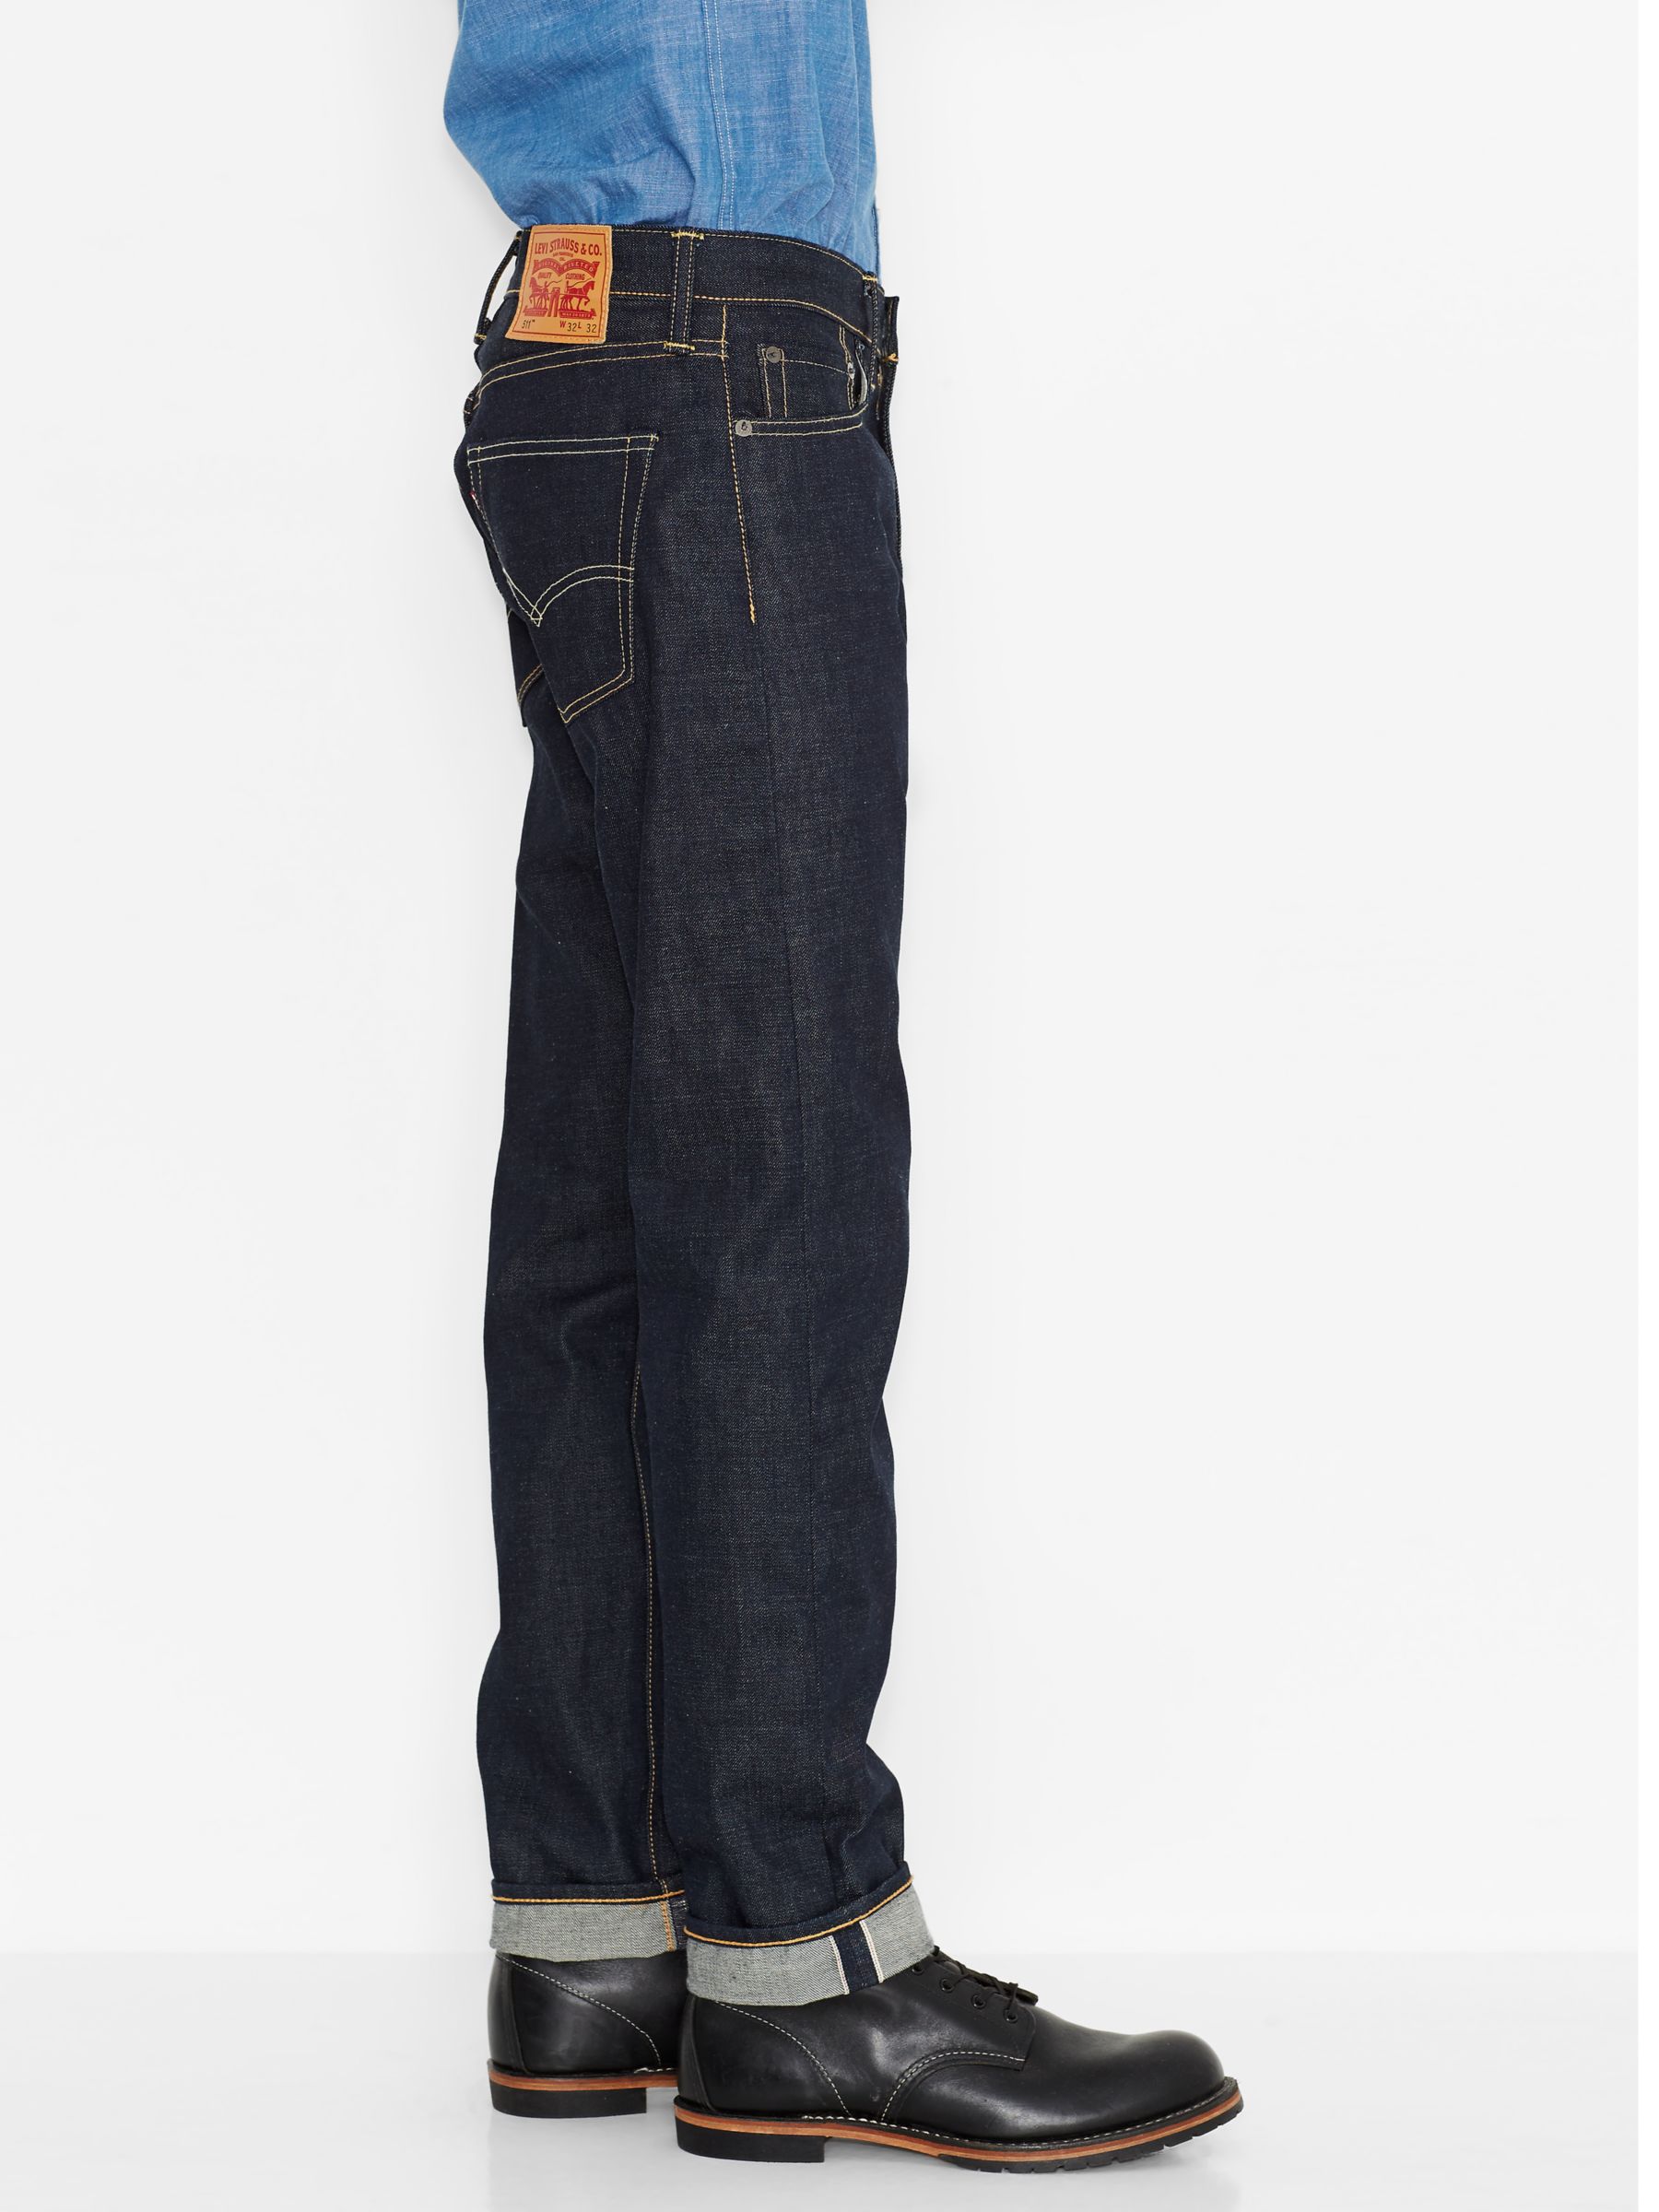 levi's 511 selvedge jeans 